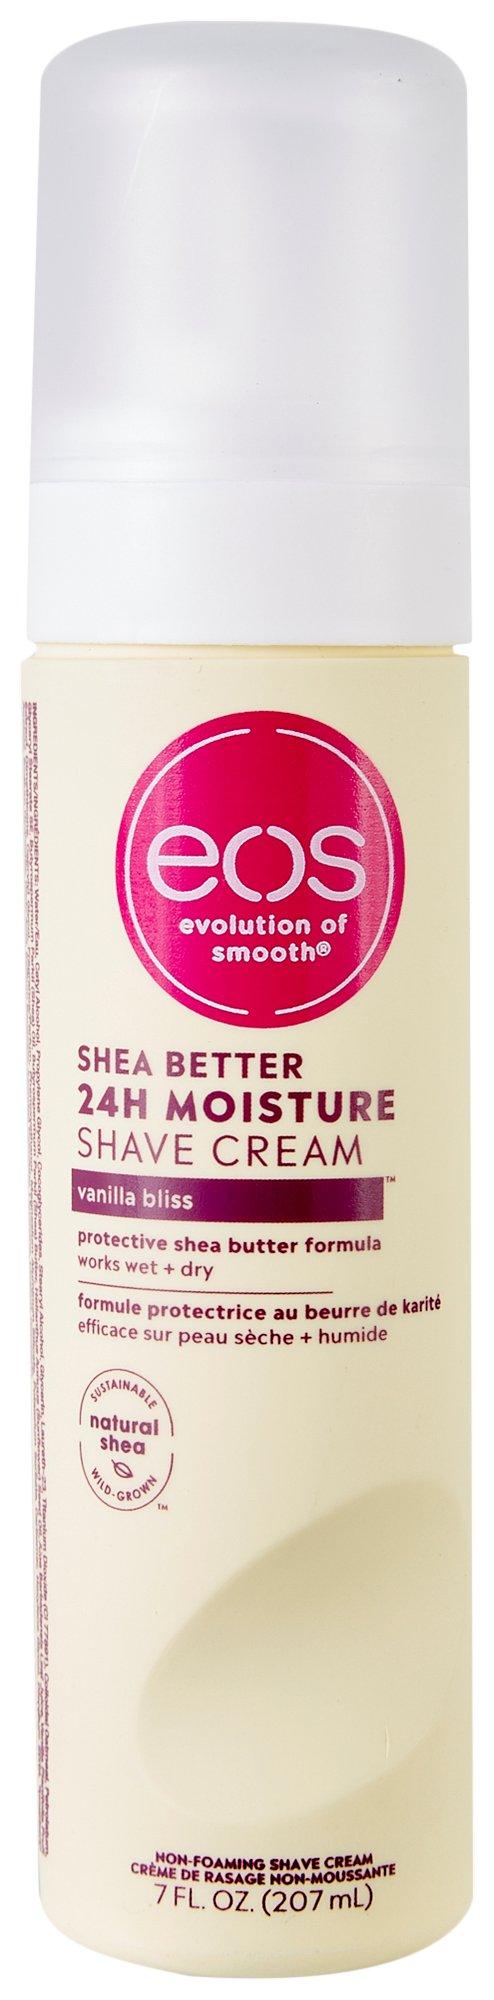 Shea Better Vanilla Bliss 24-Hour Moisture Shave Cream